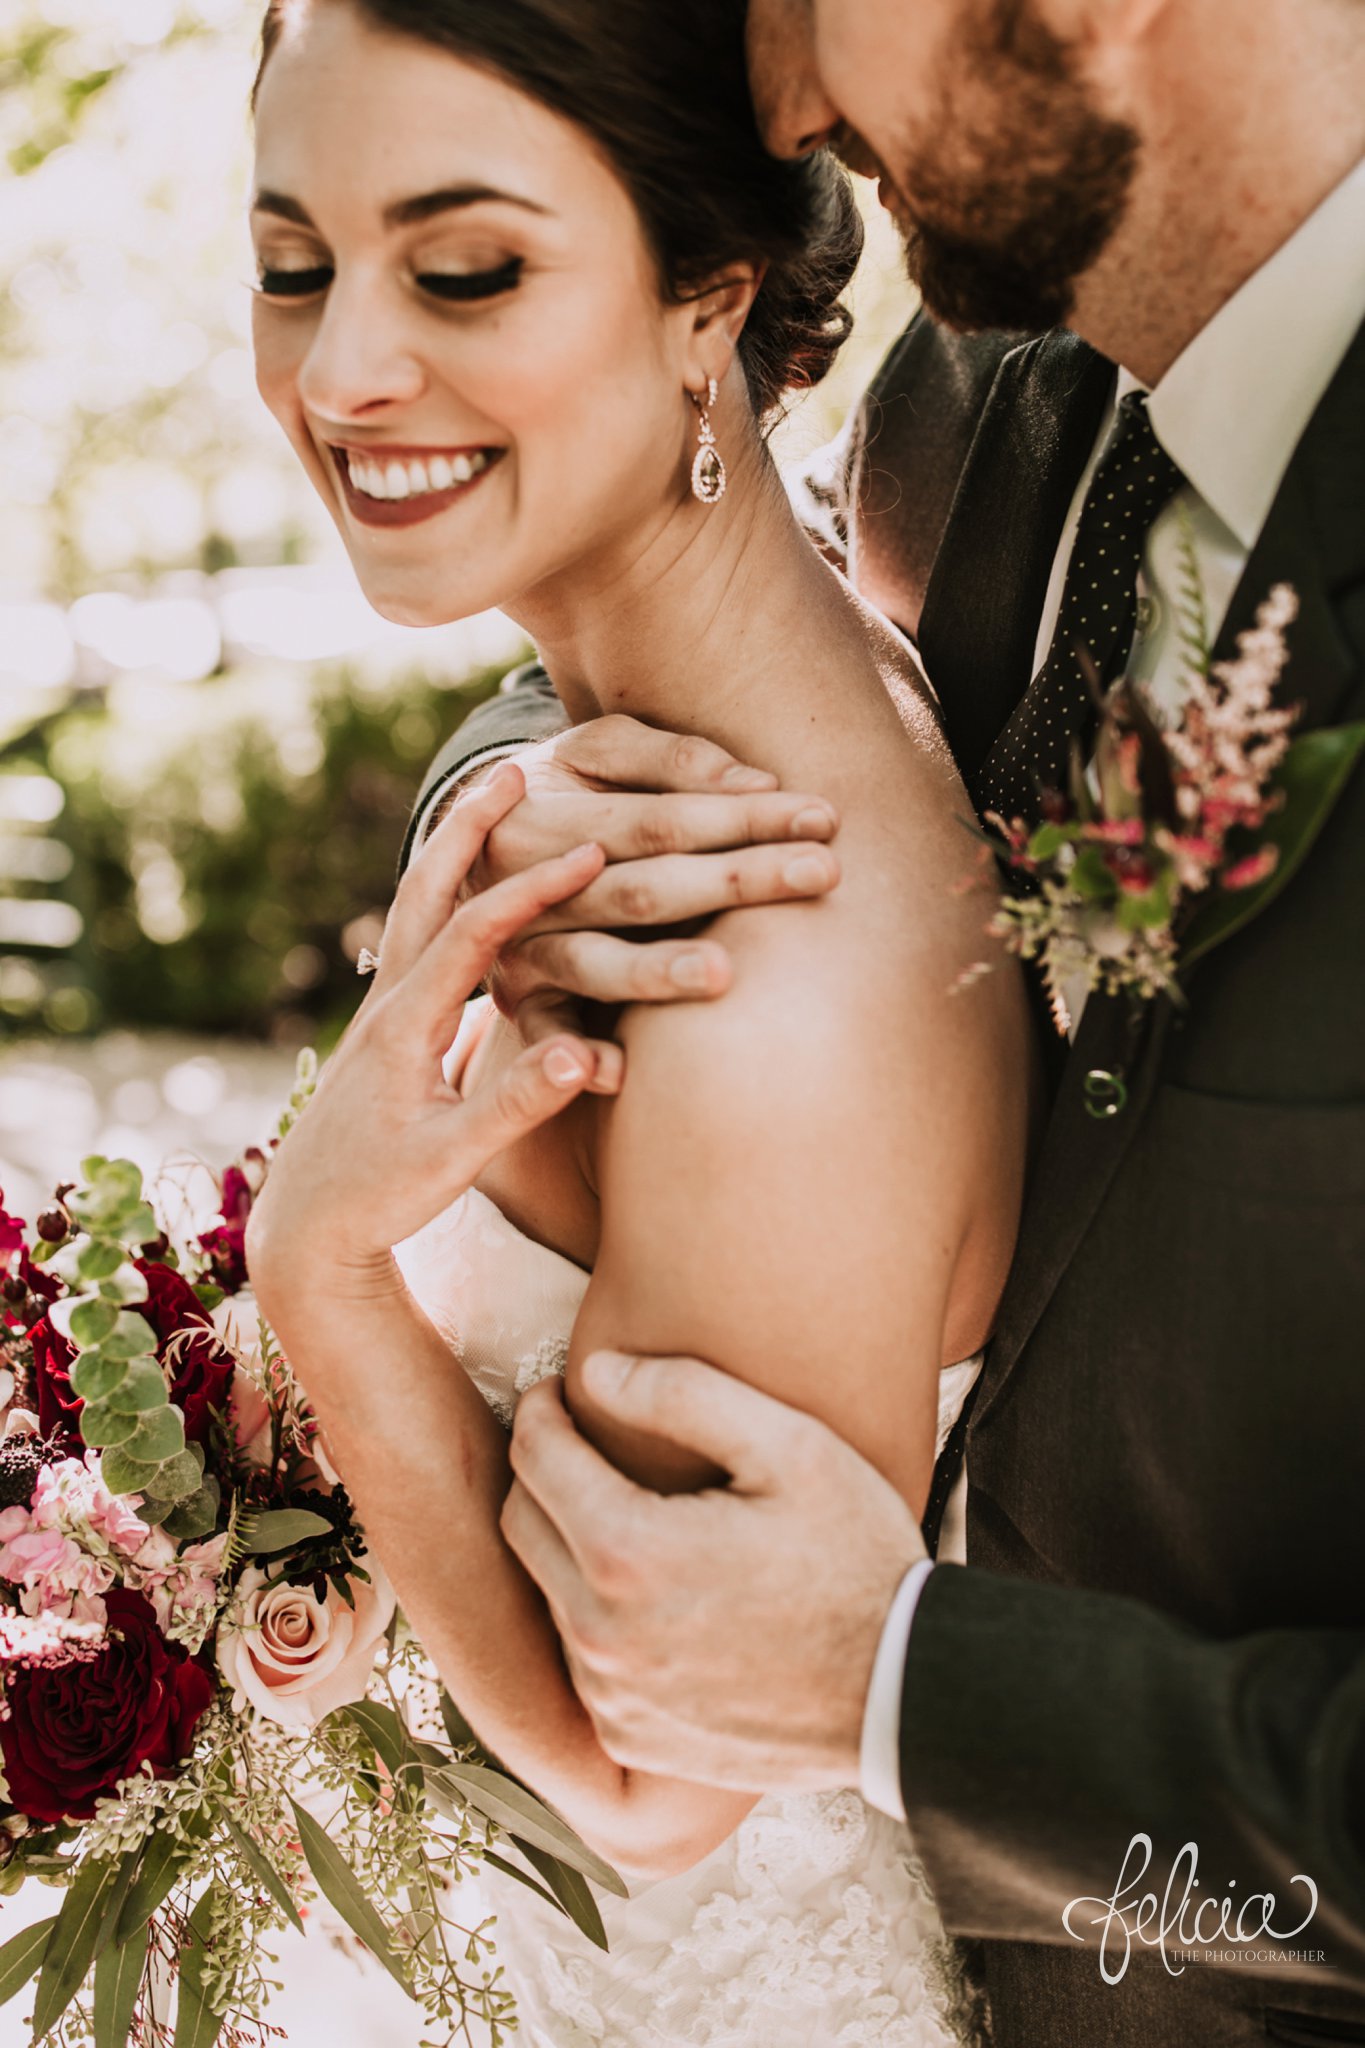 images by feliciathephotographer.com | wedding photographer | kansas city | portrait | bride and groom | romantic | rustic | golden | burgundy | rose gold | nelson atkins art museum | 